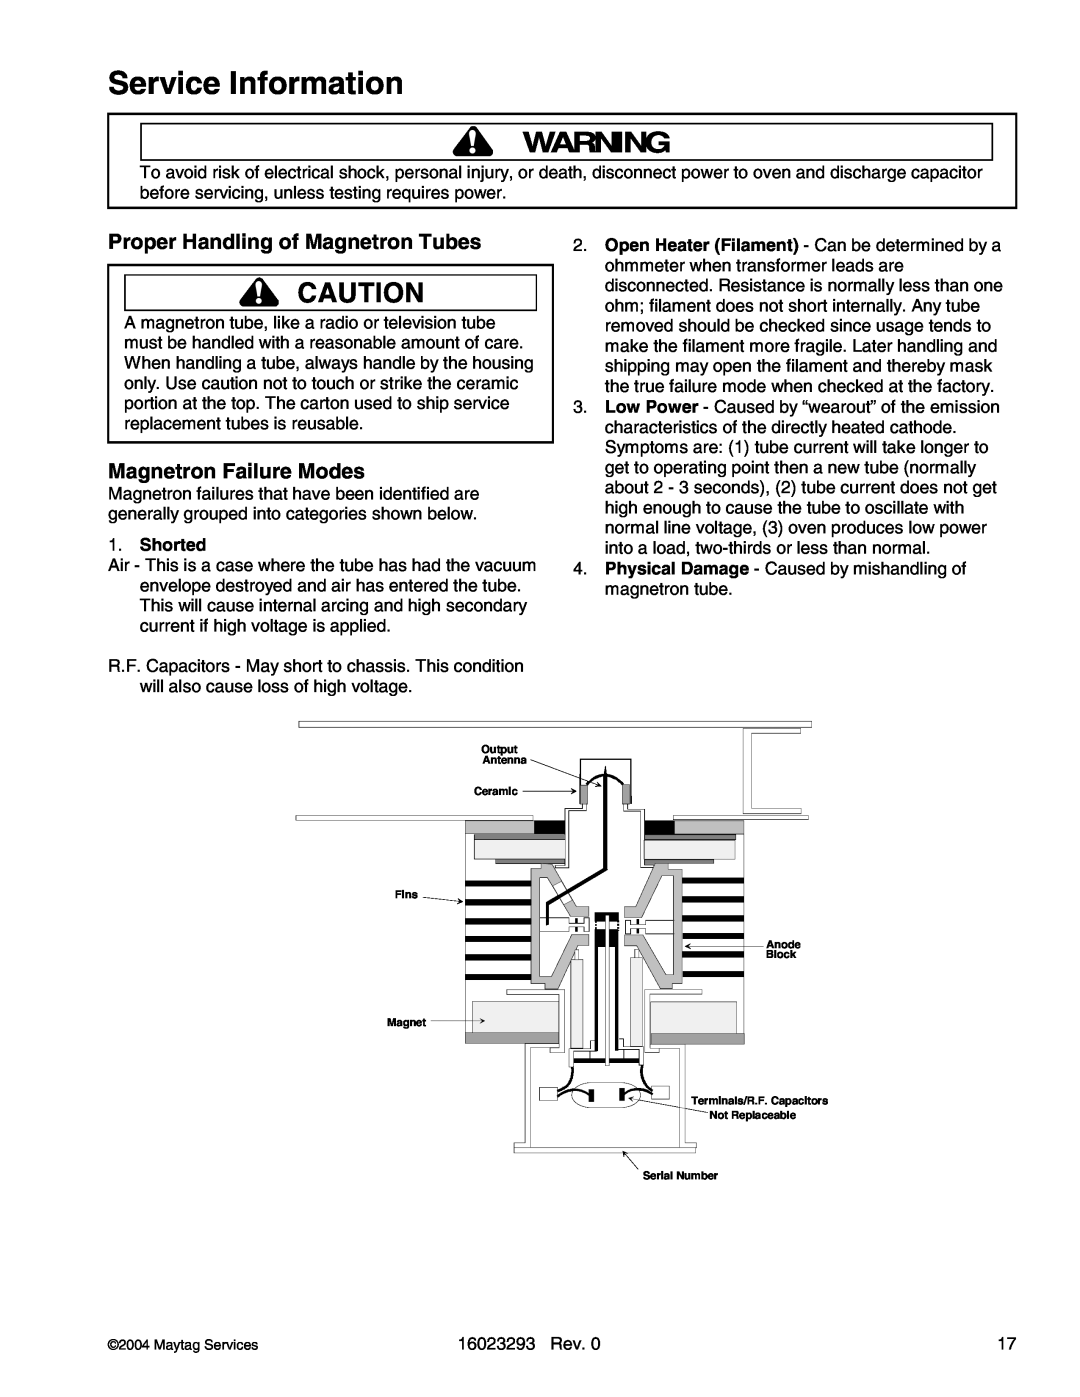 Maytag RFS, RCS10DA manual Service Information, Proper Handling of Magnetron Tubes, Magnetron Failure Modes, Shorted 